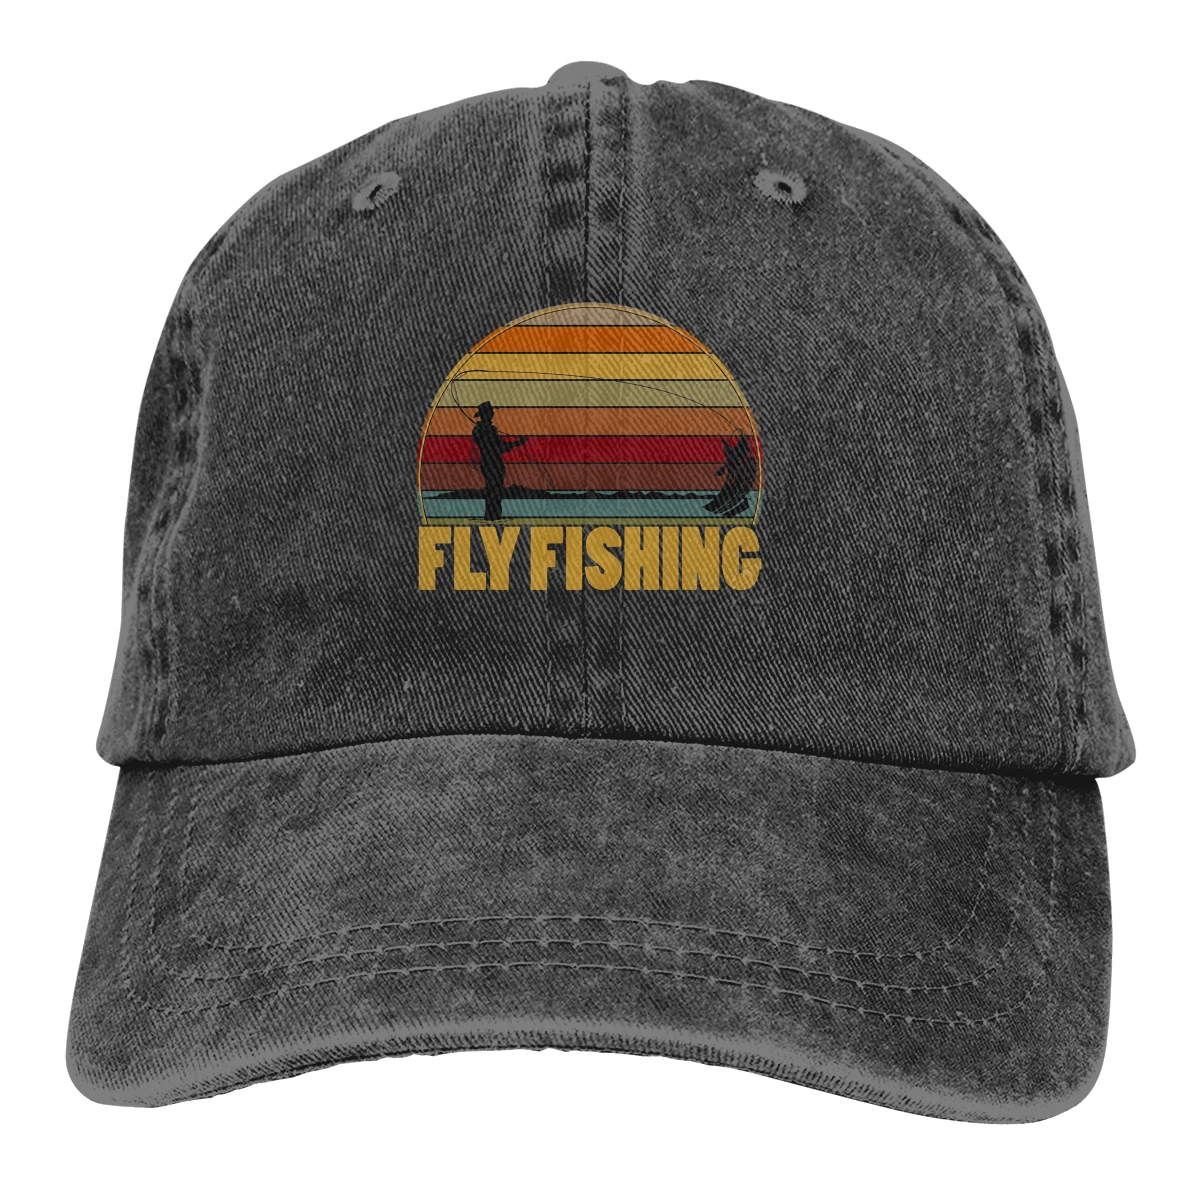 https://ae01.alicdn.com/kf/H2eab71e941e3423c8e27dca0199ab6c1N/2020-Flyfishing-Fisherman-Baseball-Caps-Peaked-Cap-Fishing-Sun-Shade-Hats-for-Men.jpg